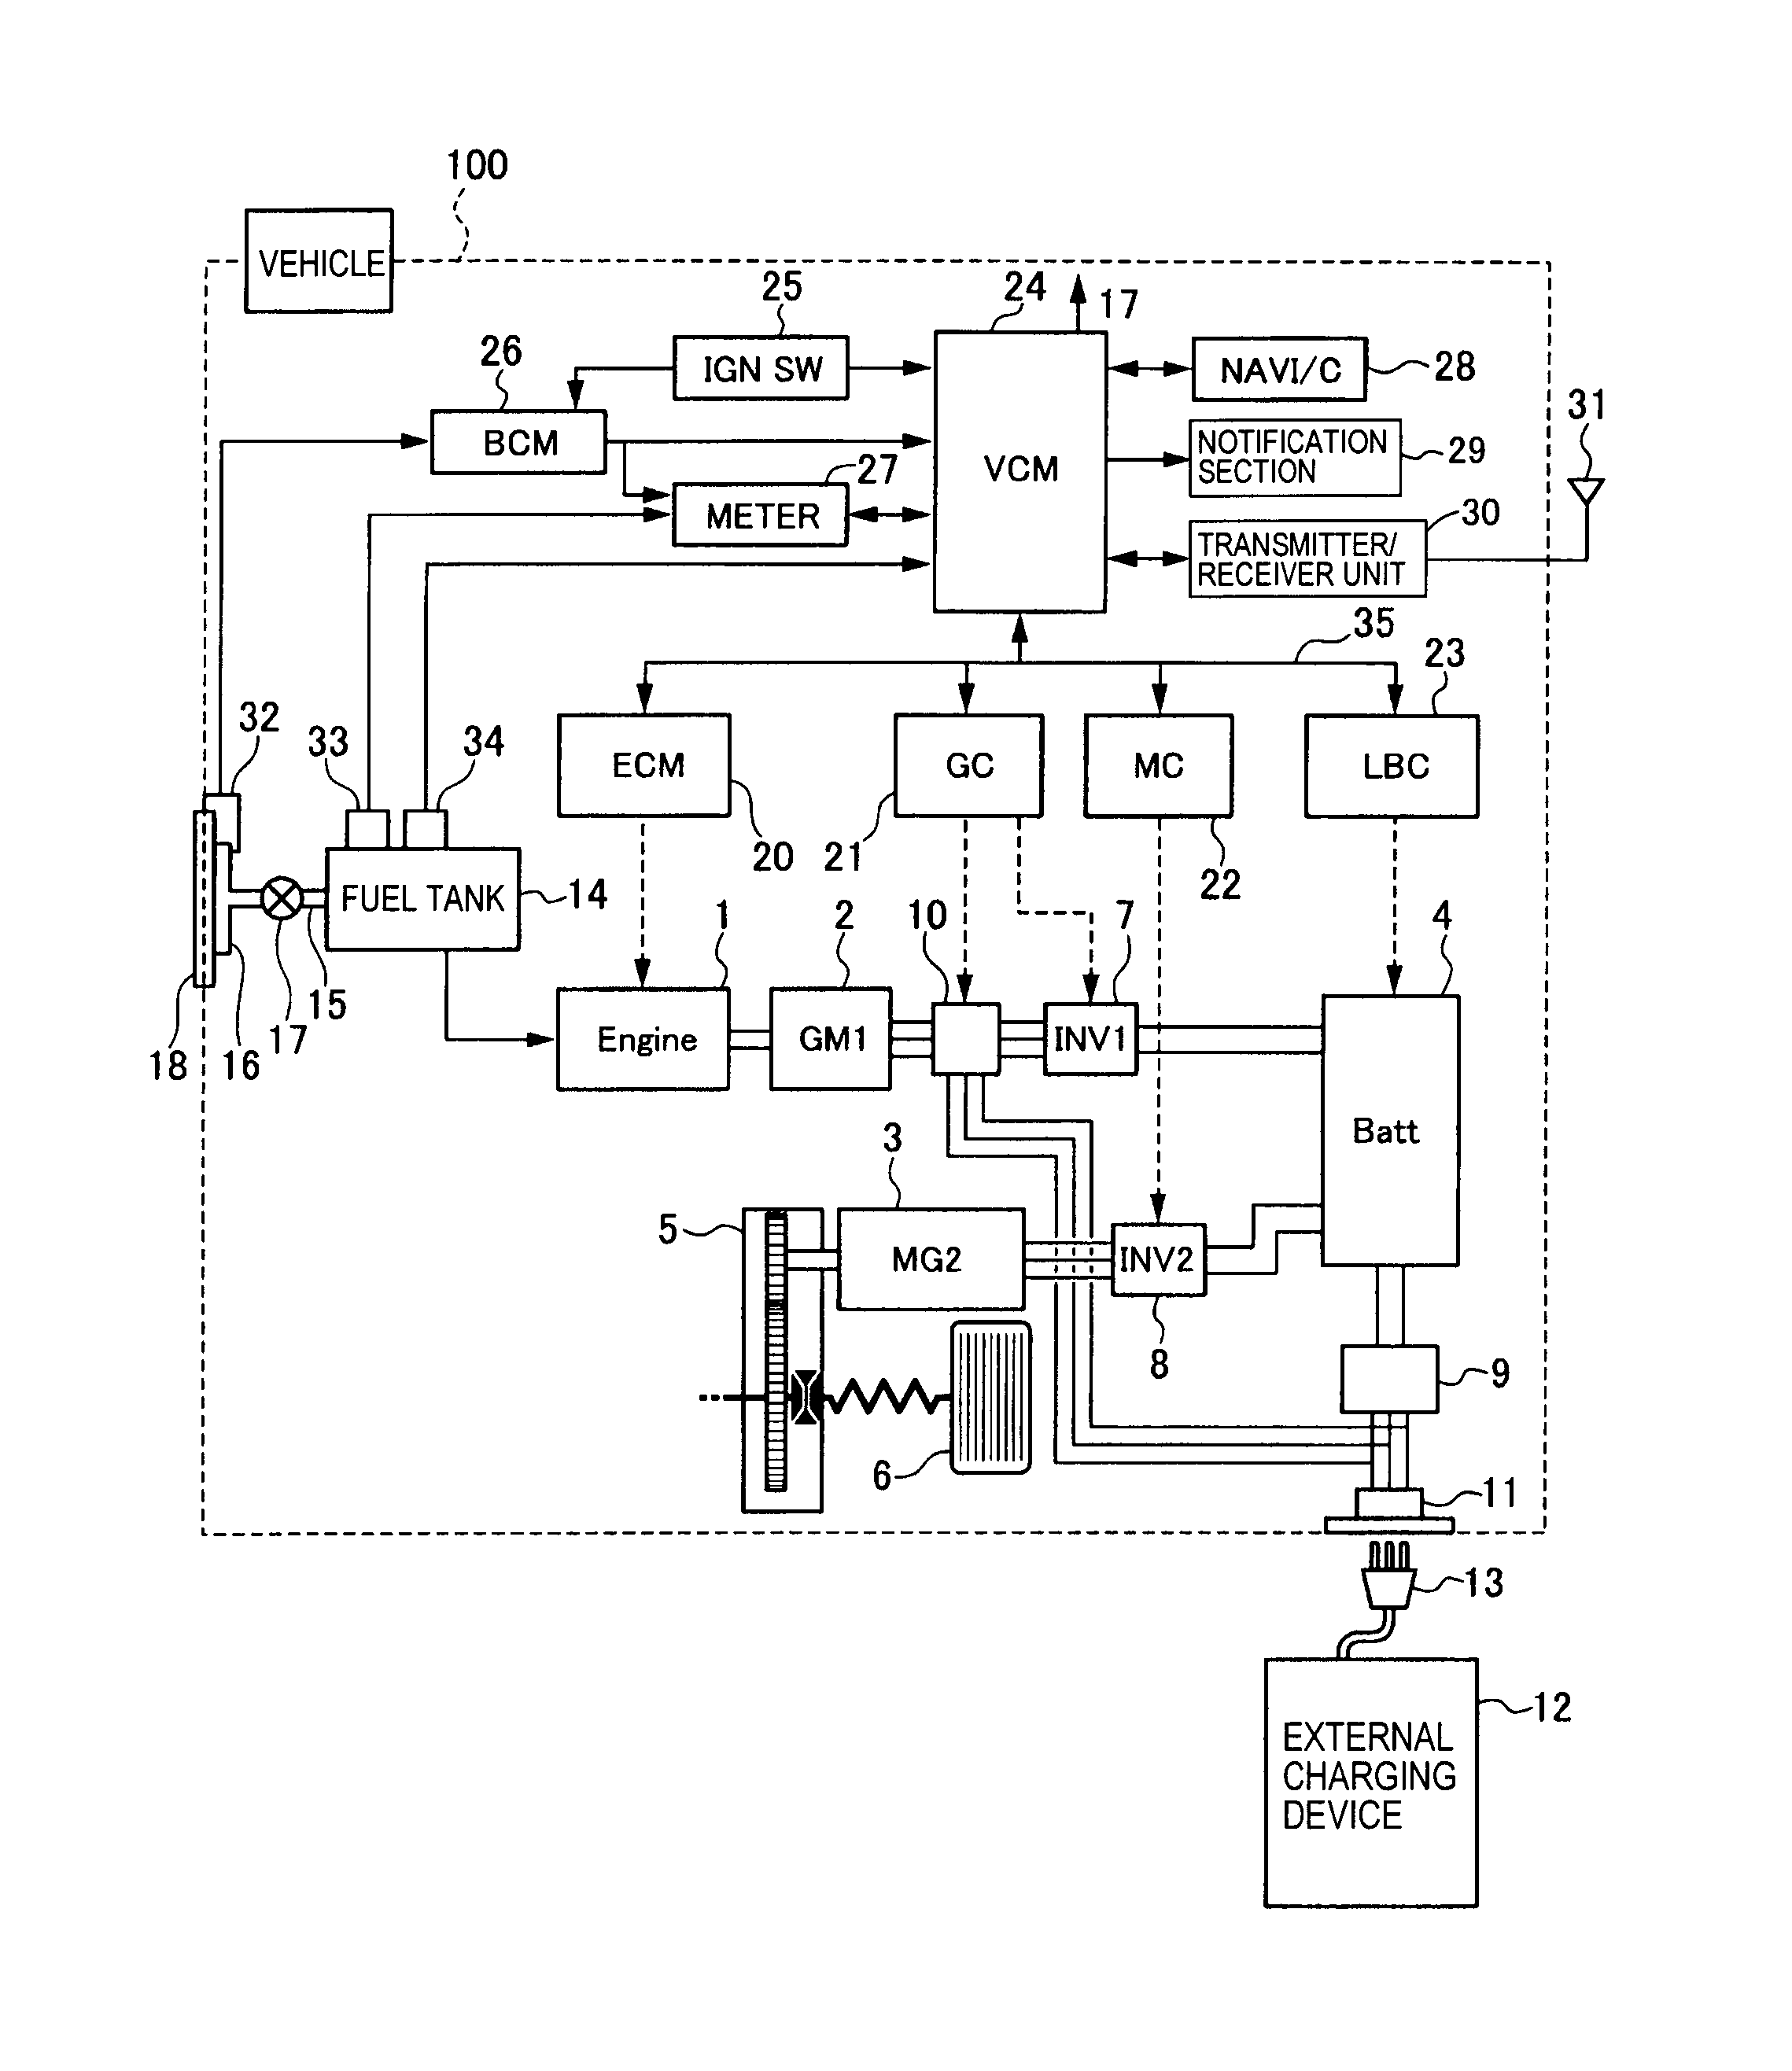 wb20k10026 wiring diagram